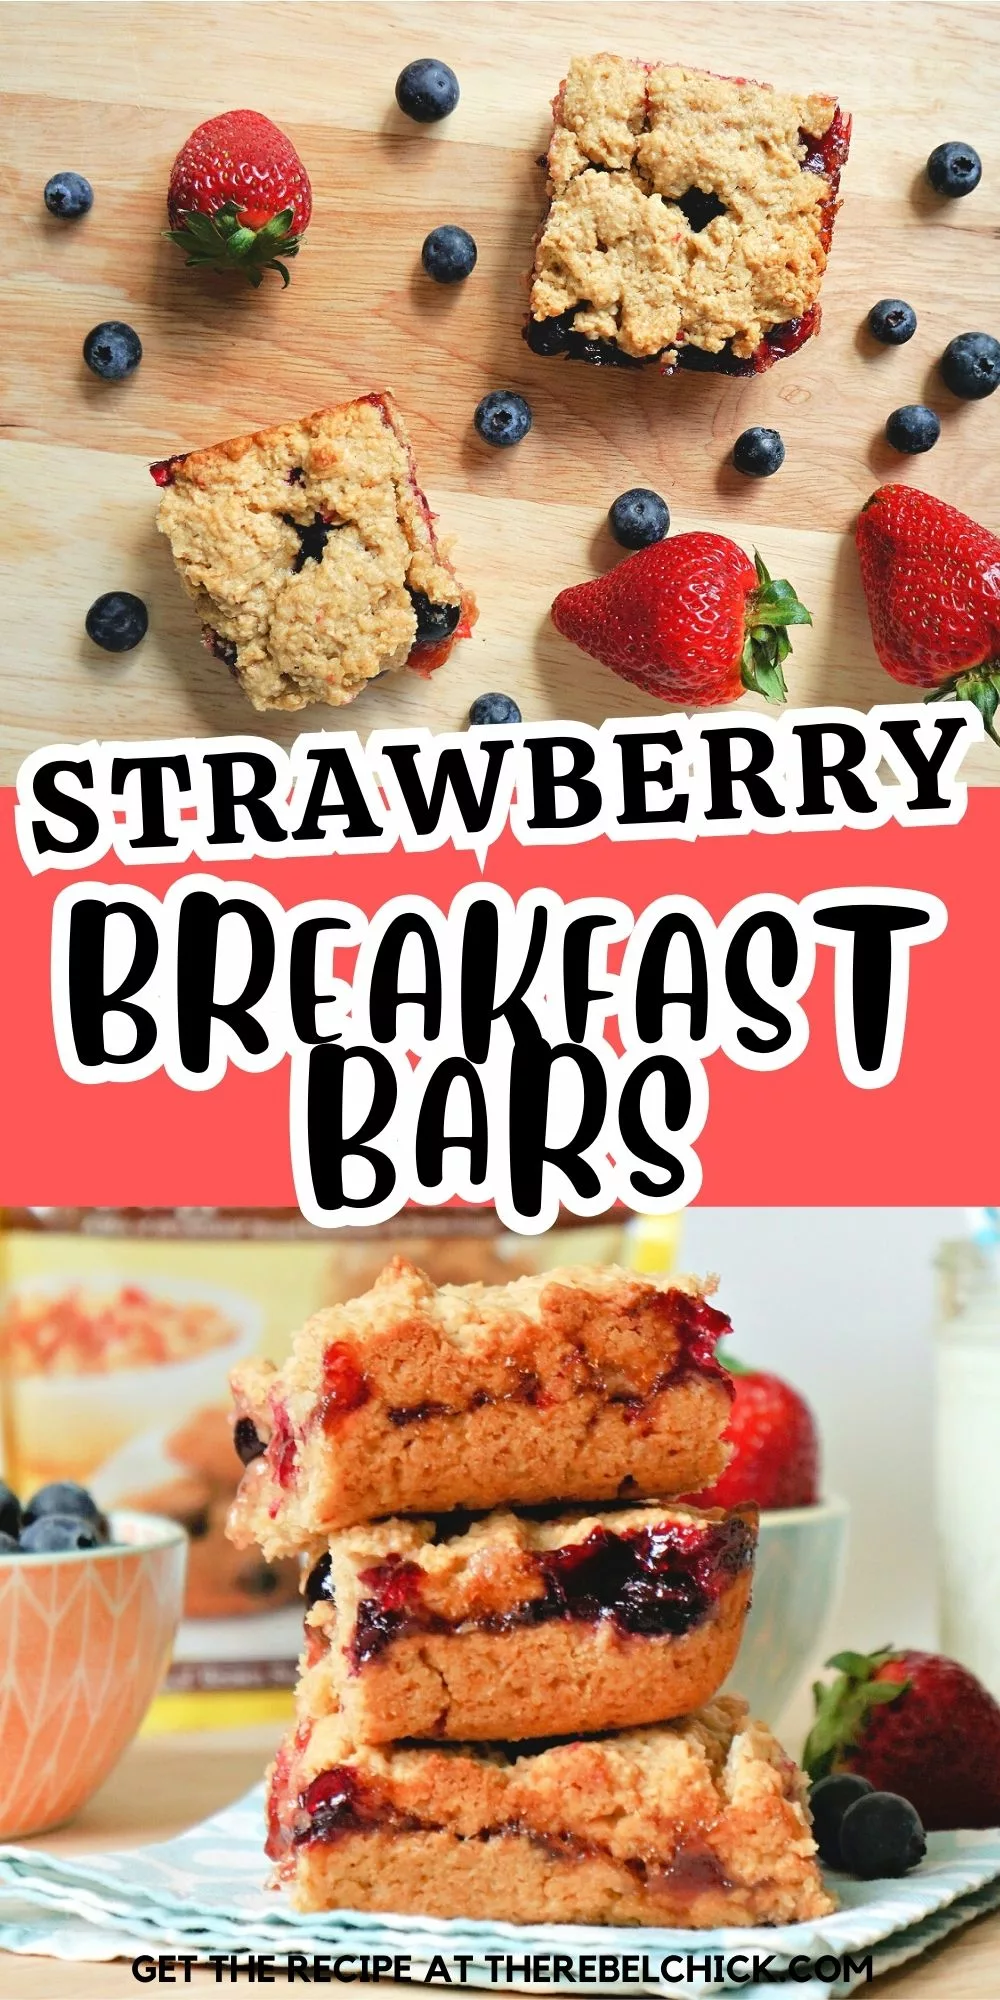 Strawberry Breakfast Bars